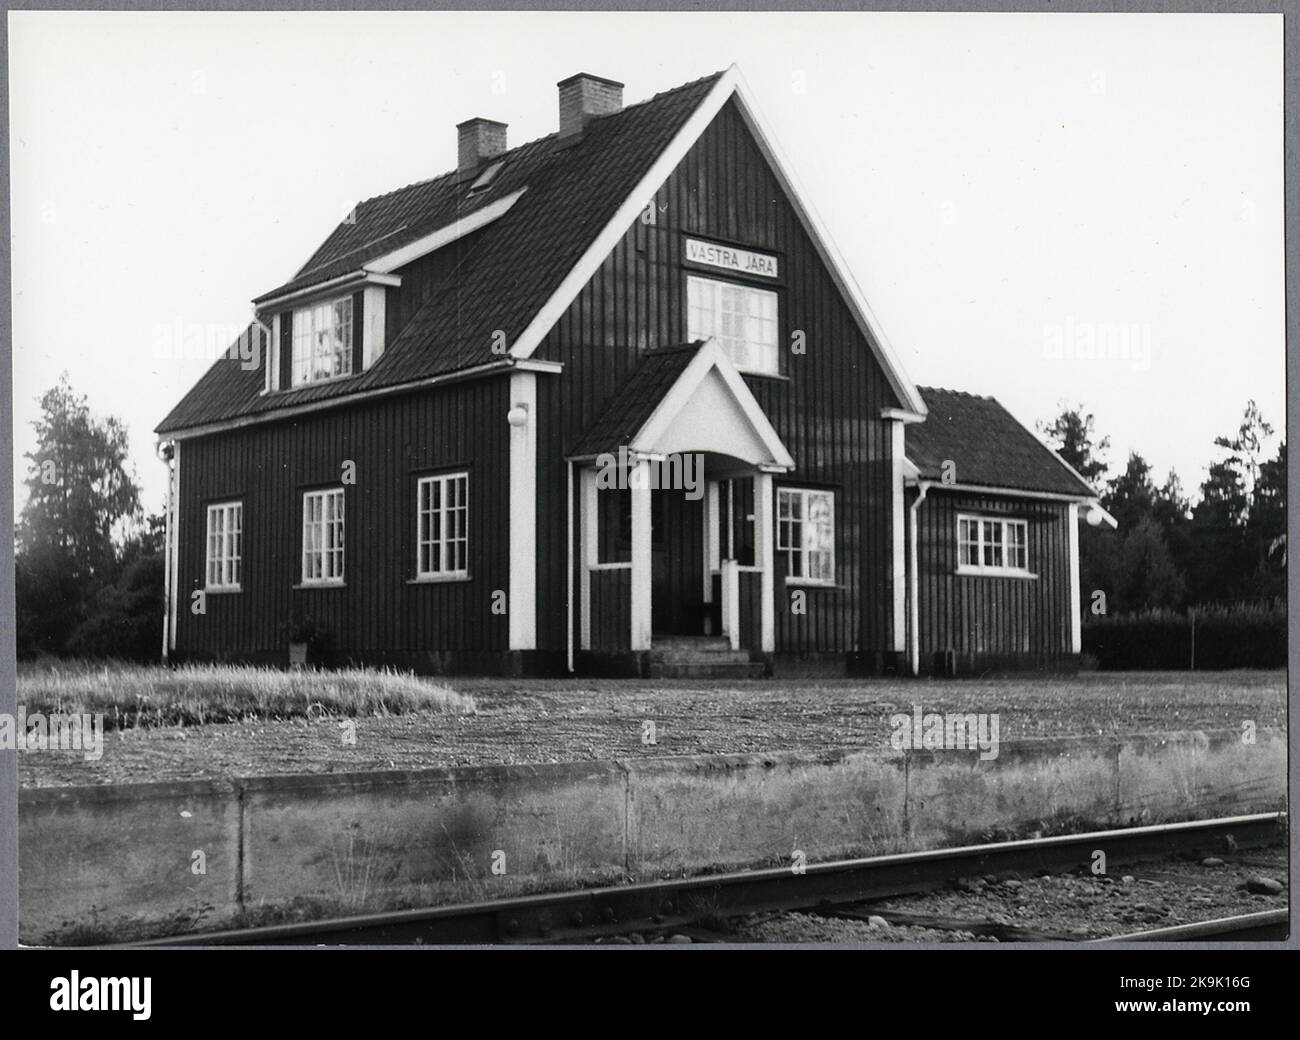 Western Jär stop. Closing of the band Ulricehamn - Jönköping on September 1, 1960. Stock Photo